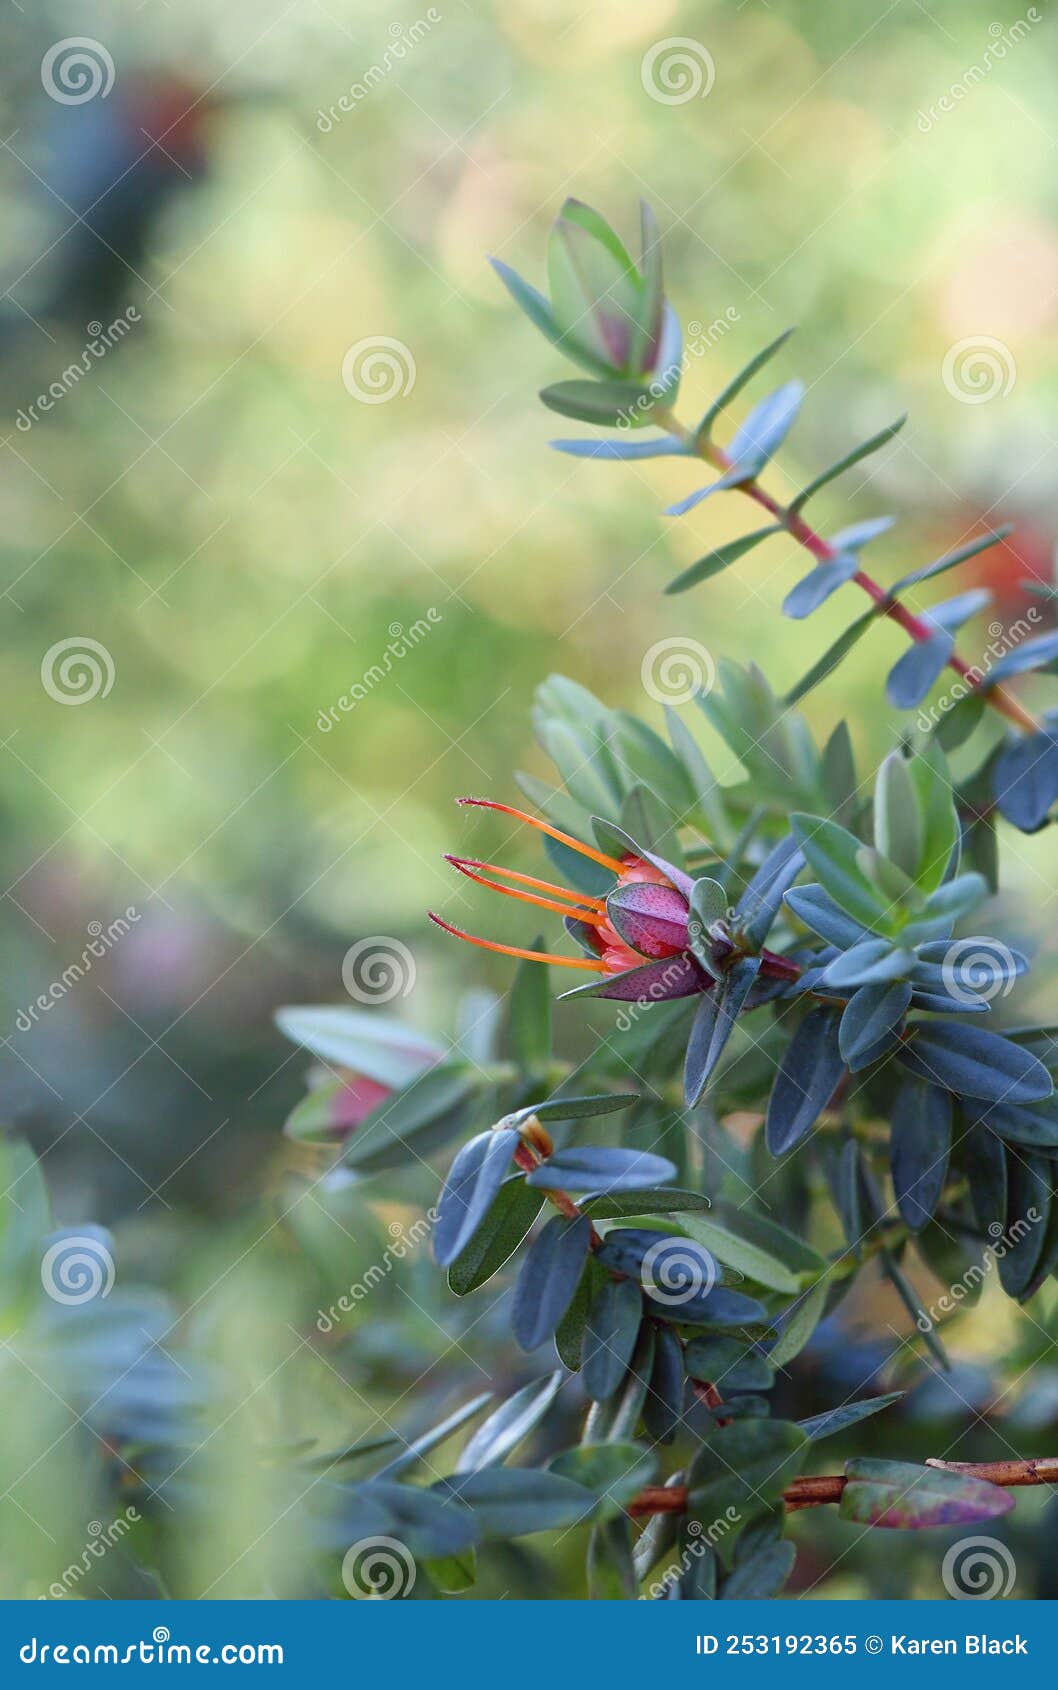 close up of an australian native lemon scented myrtle inflorescence, darwinia citriodora, family myrtaceae